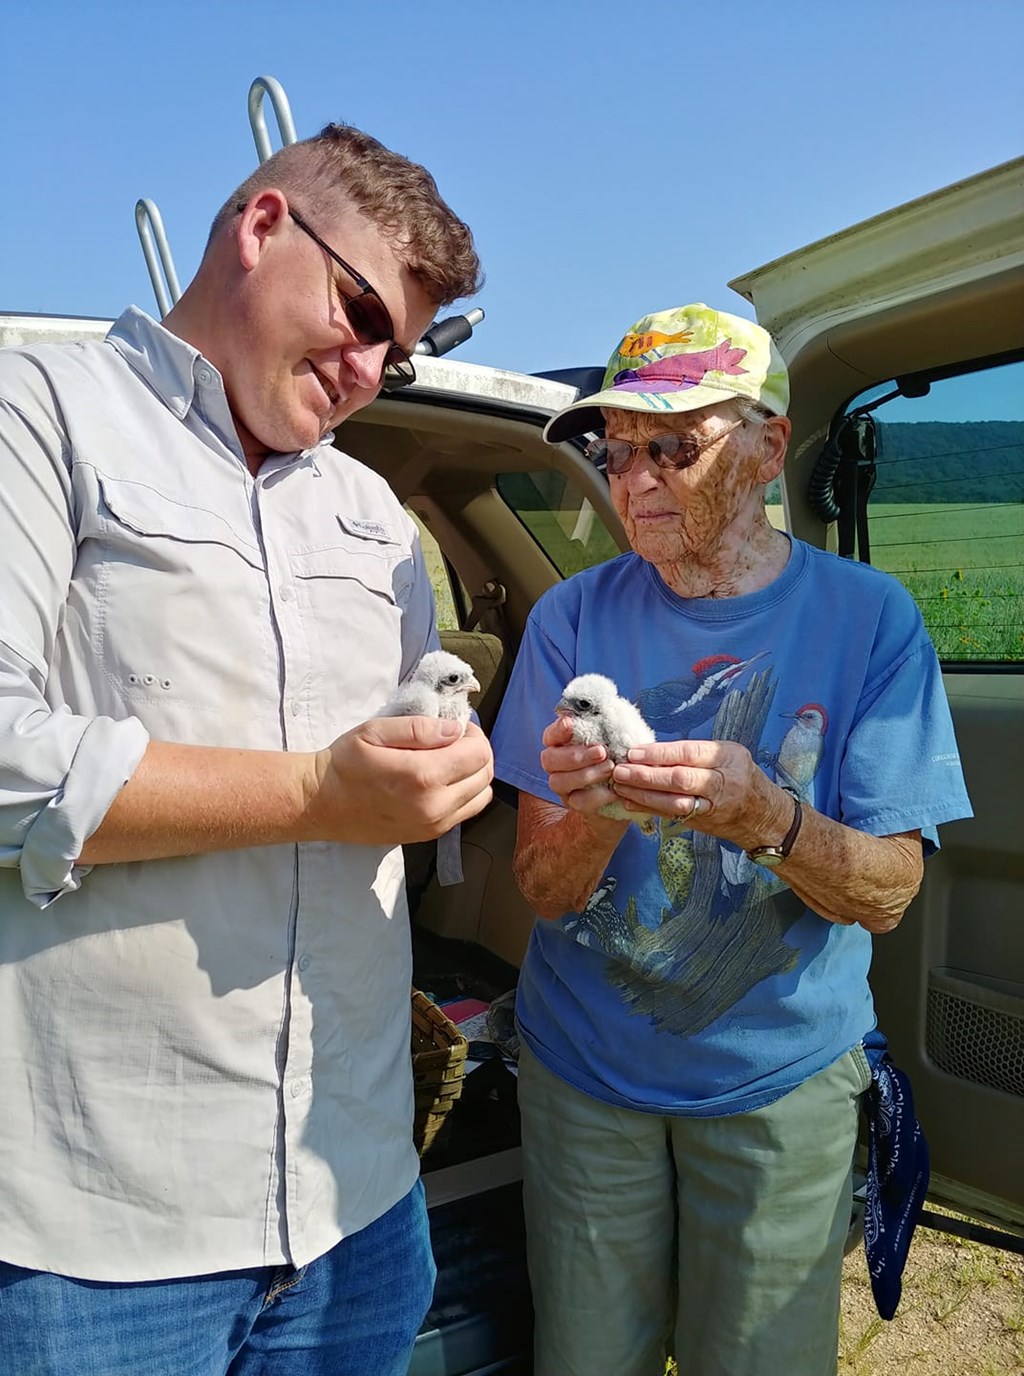 HMS Biologist and Volunteer hold recently banded American kestrel chicks